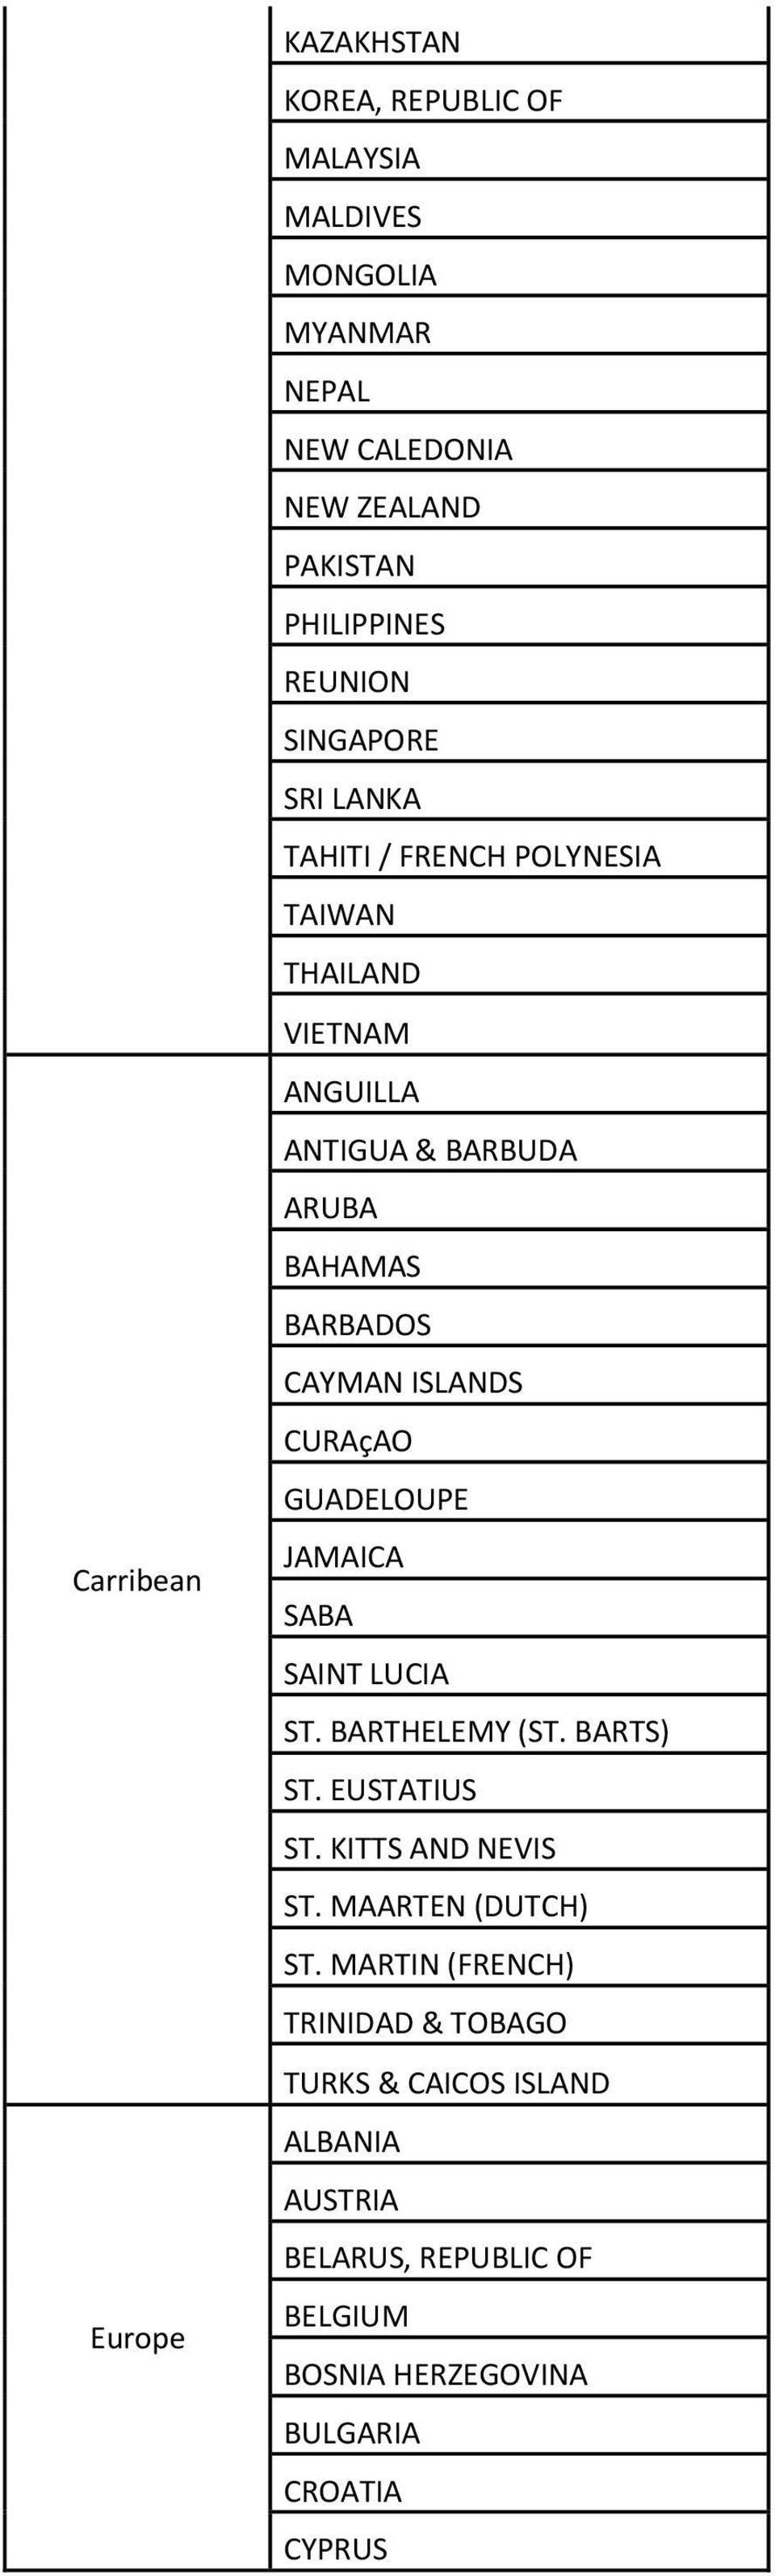 ISLANDS CURAçAO GUADELOUPE JAMAICA SABA SAINT LUCIA ST. BARTHELEMY (ST. BARTS) ST. EUSTATIUS ST. KITTS AND NEVIS ST. MAARTEN (DUTCH) ST.